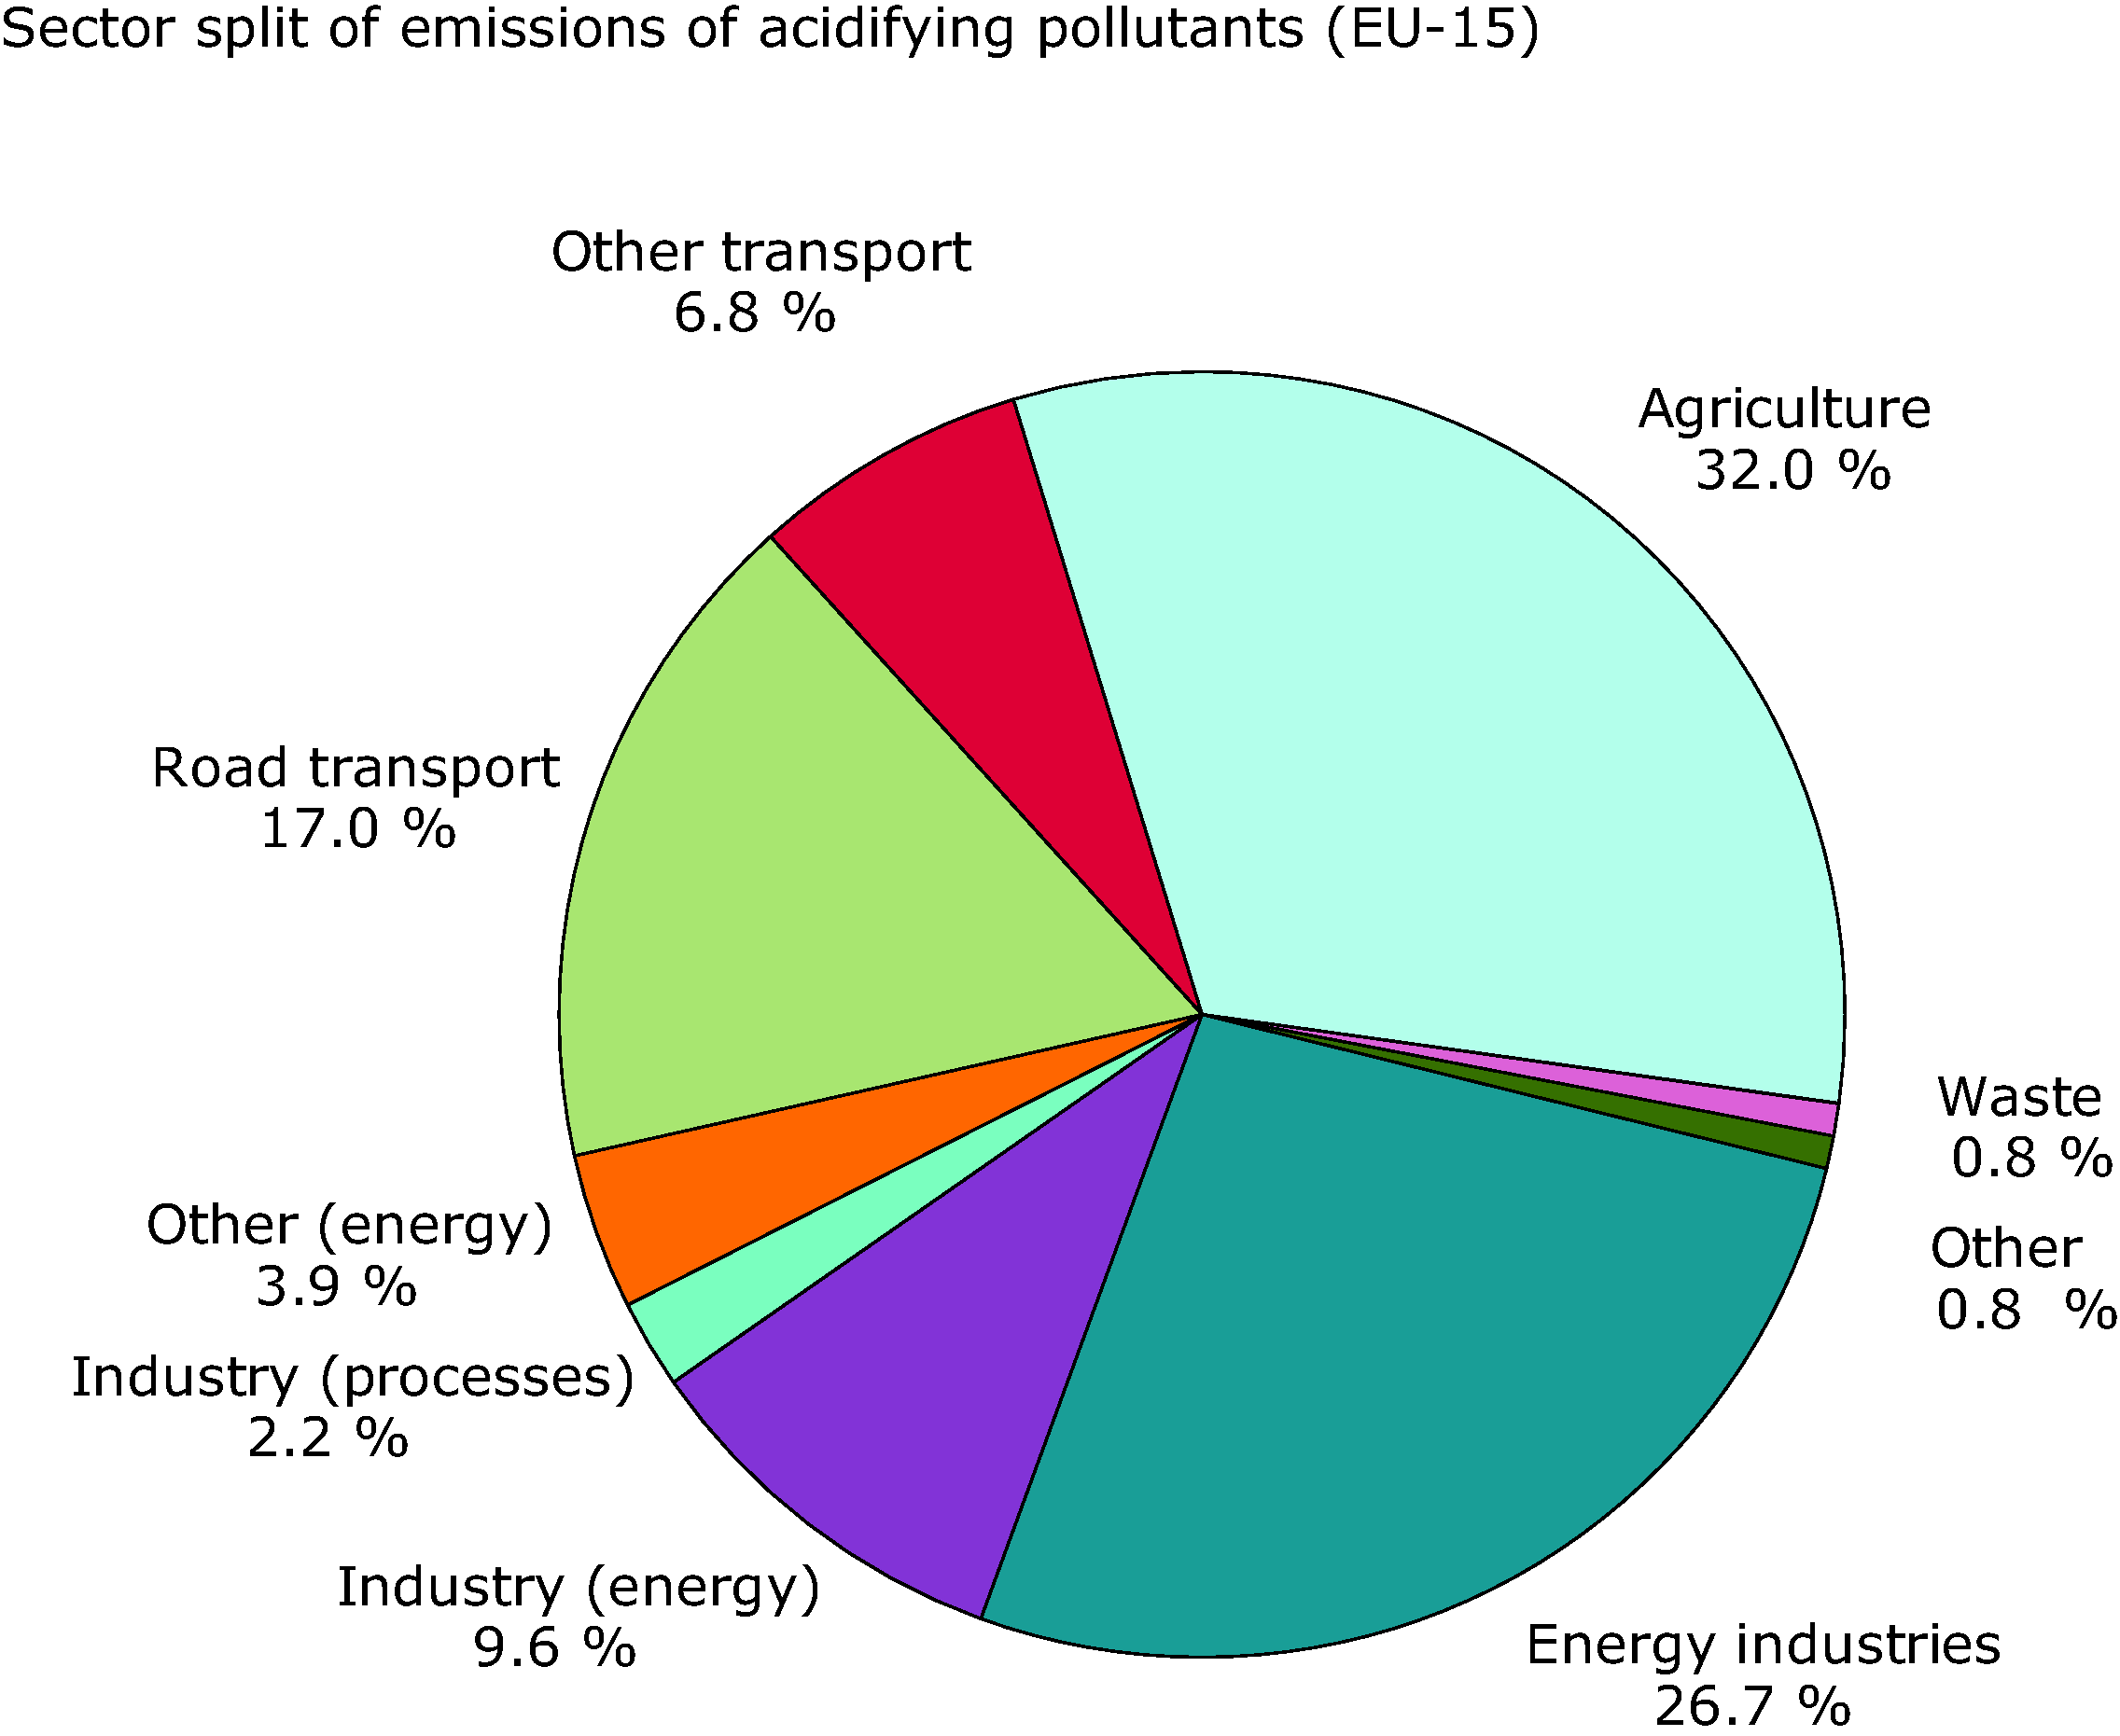 Sector split for emissions of acidifying pollutants (EU-15), 2002